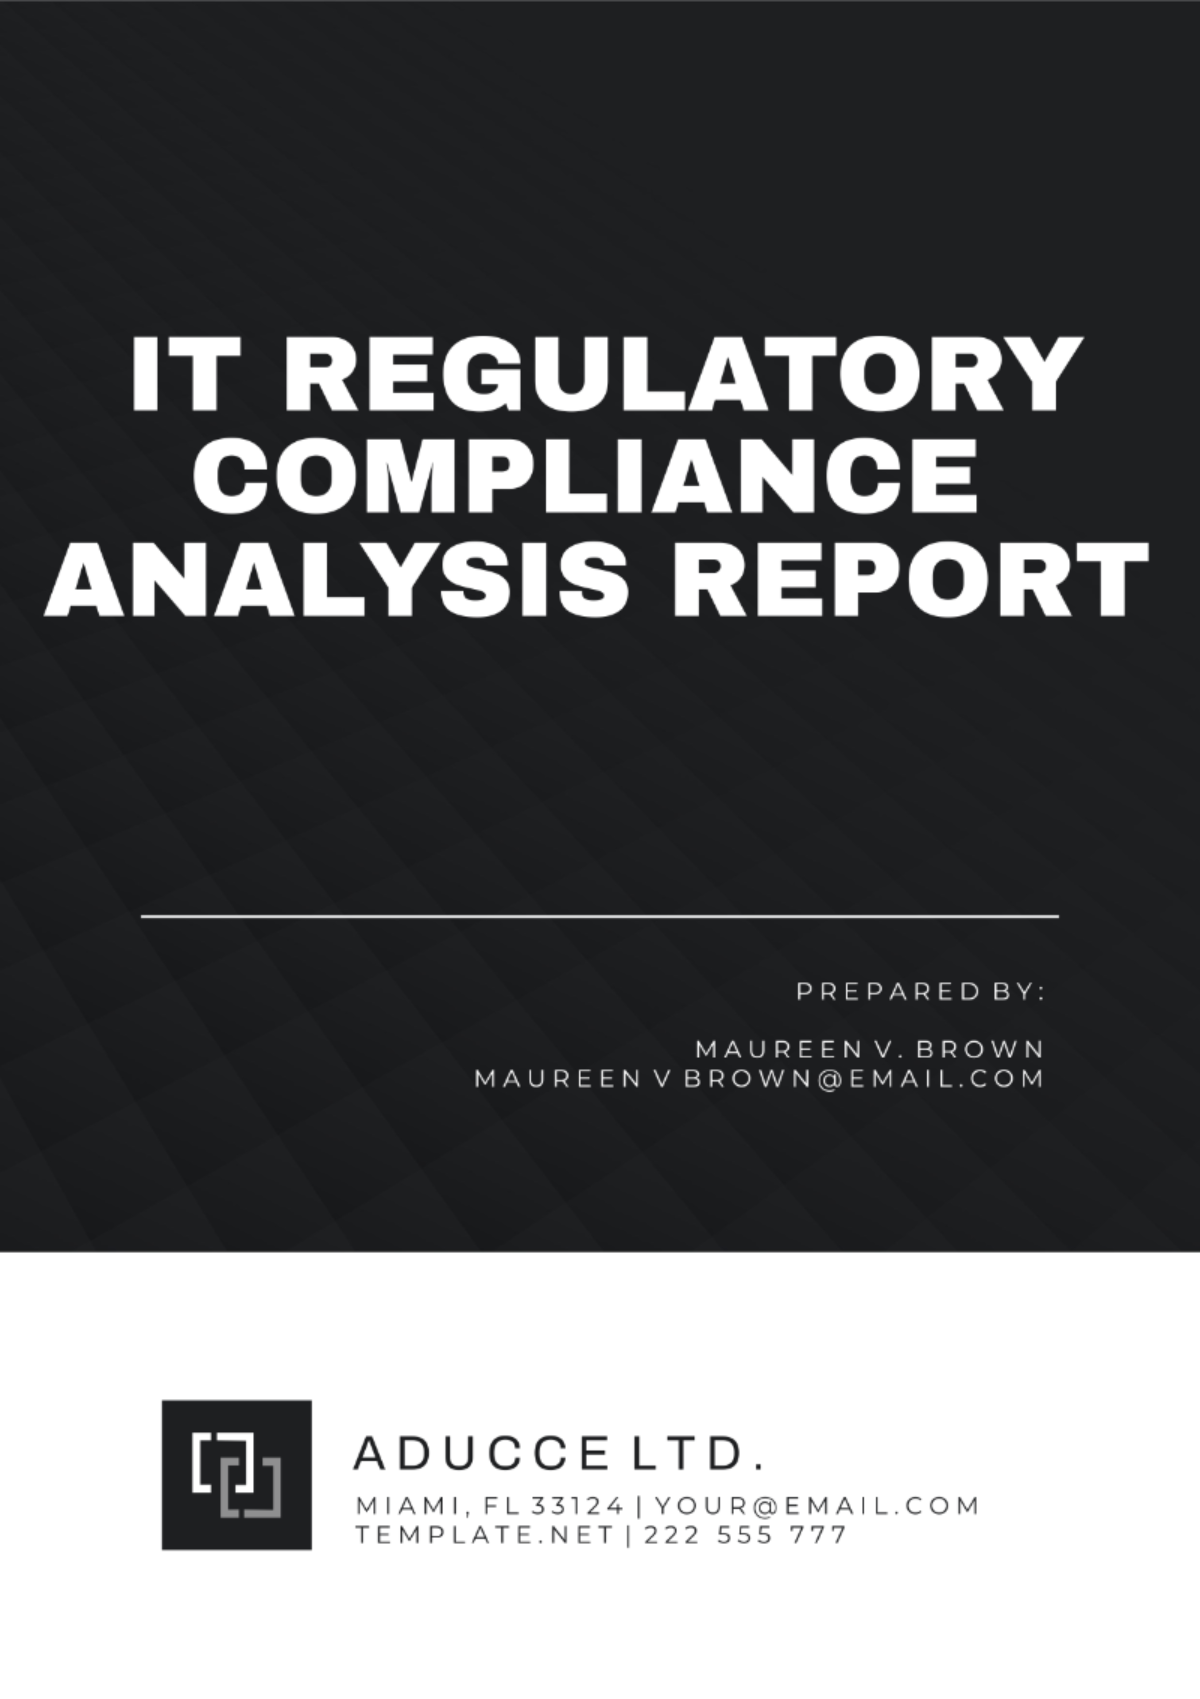 IT Regulatory Compliance Analysis Report Template